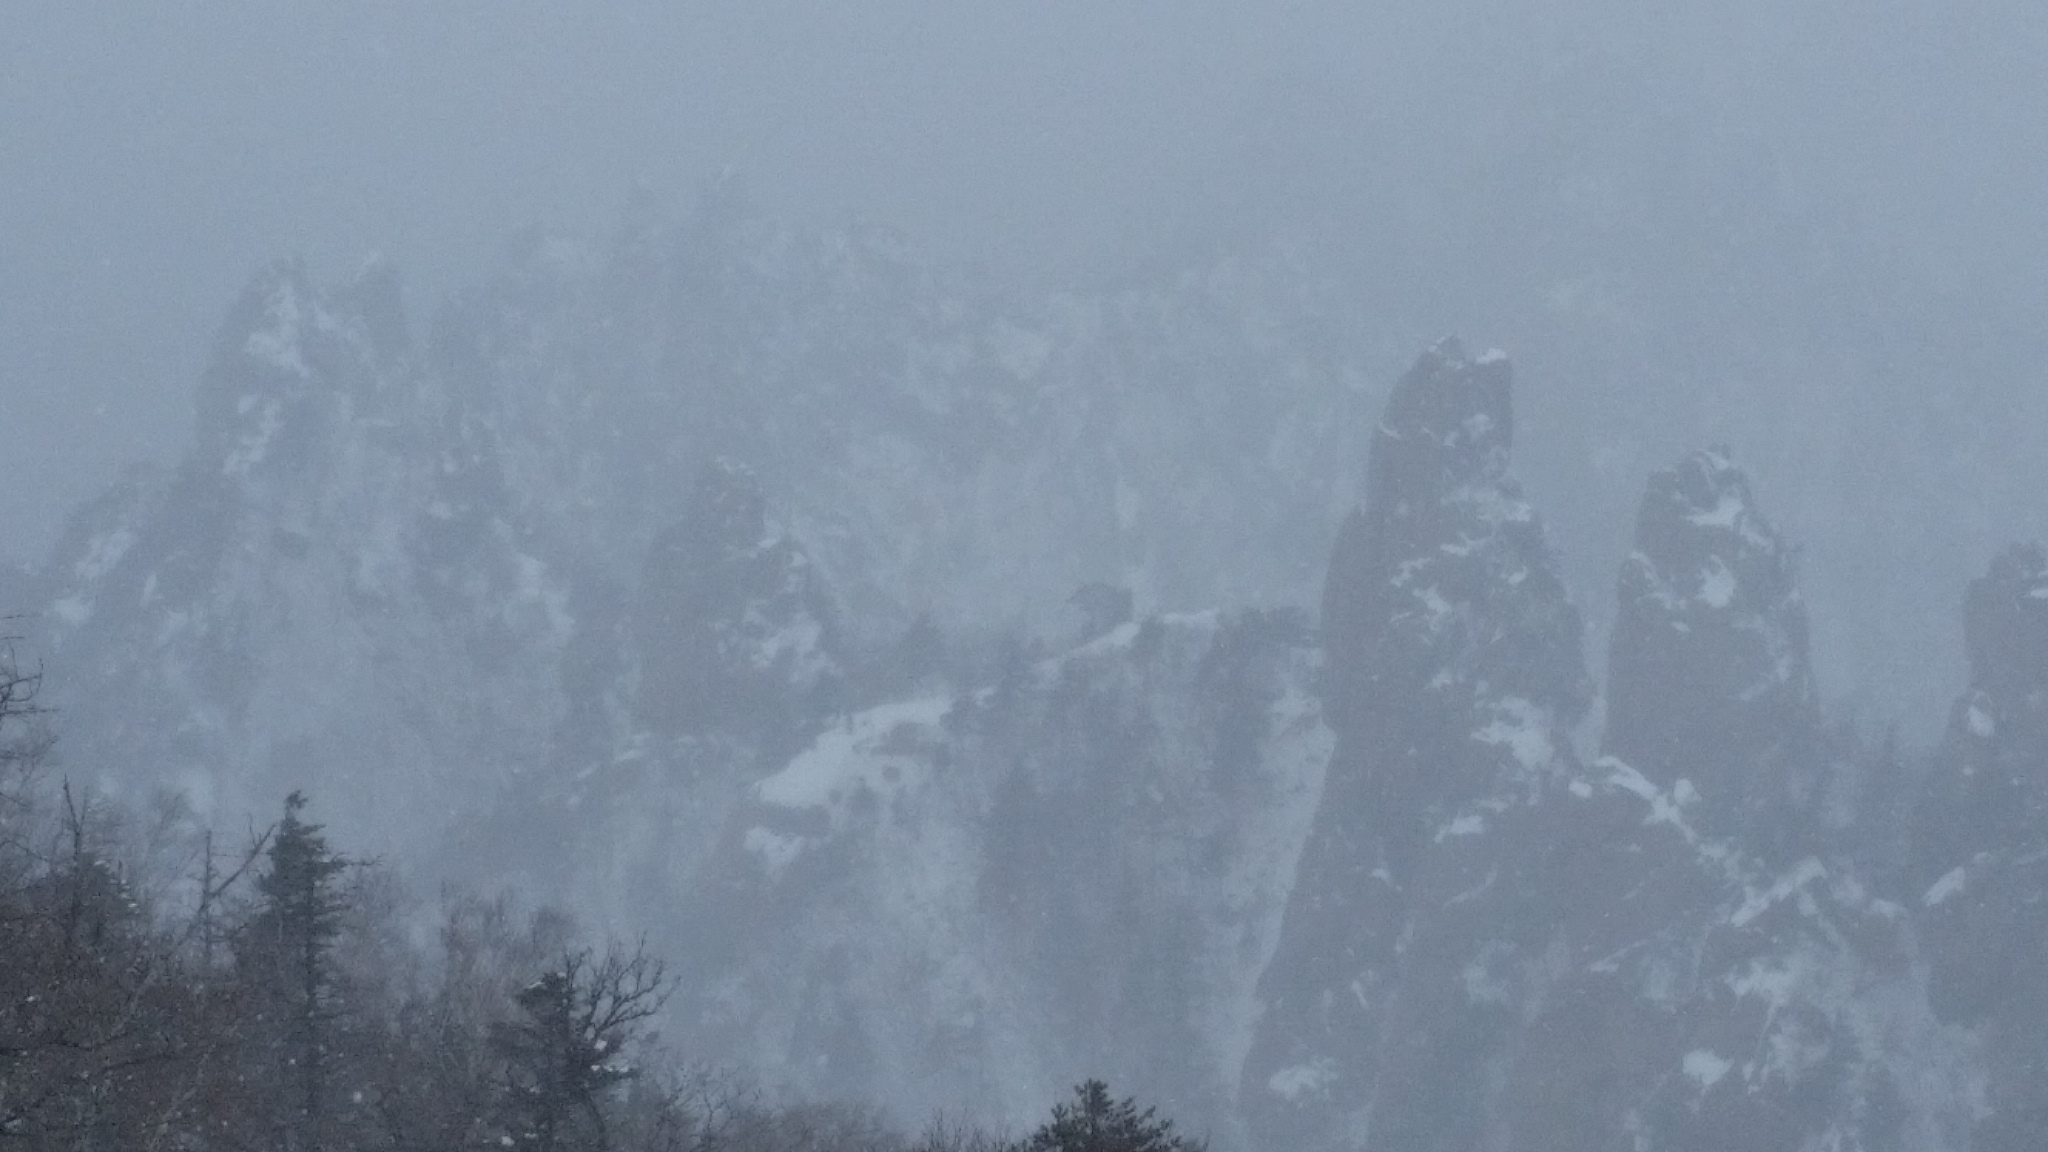 20150221_135348.jpg : 설악산에 눈이내리네요.